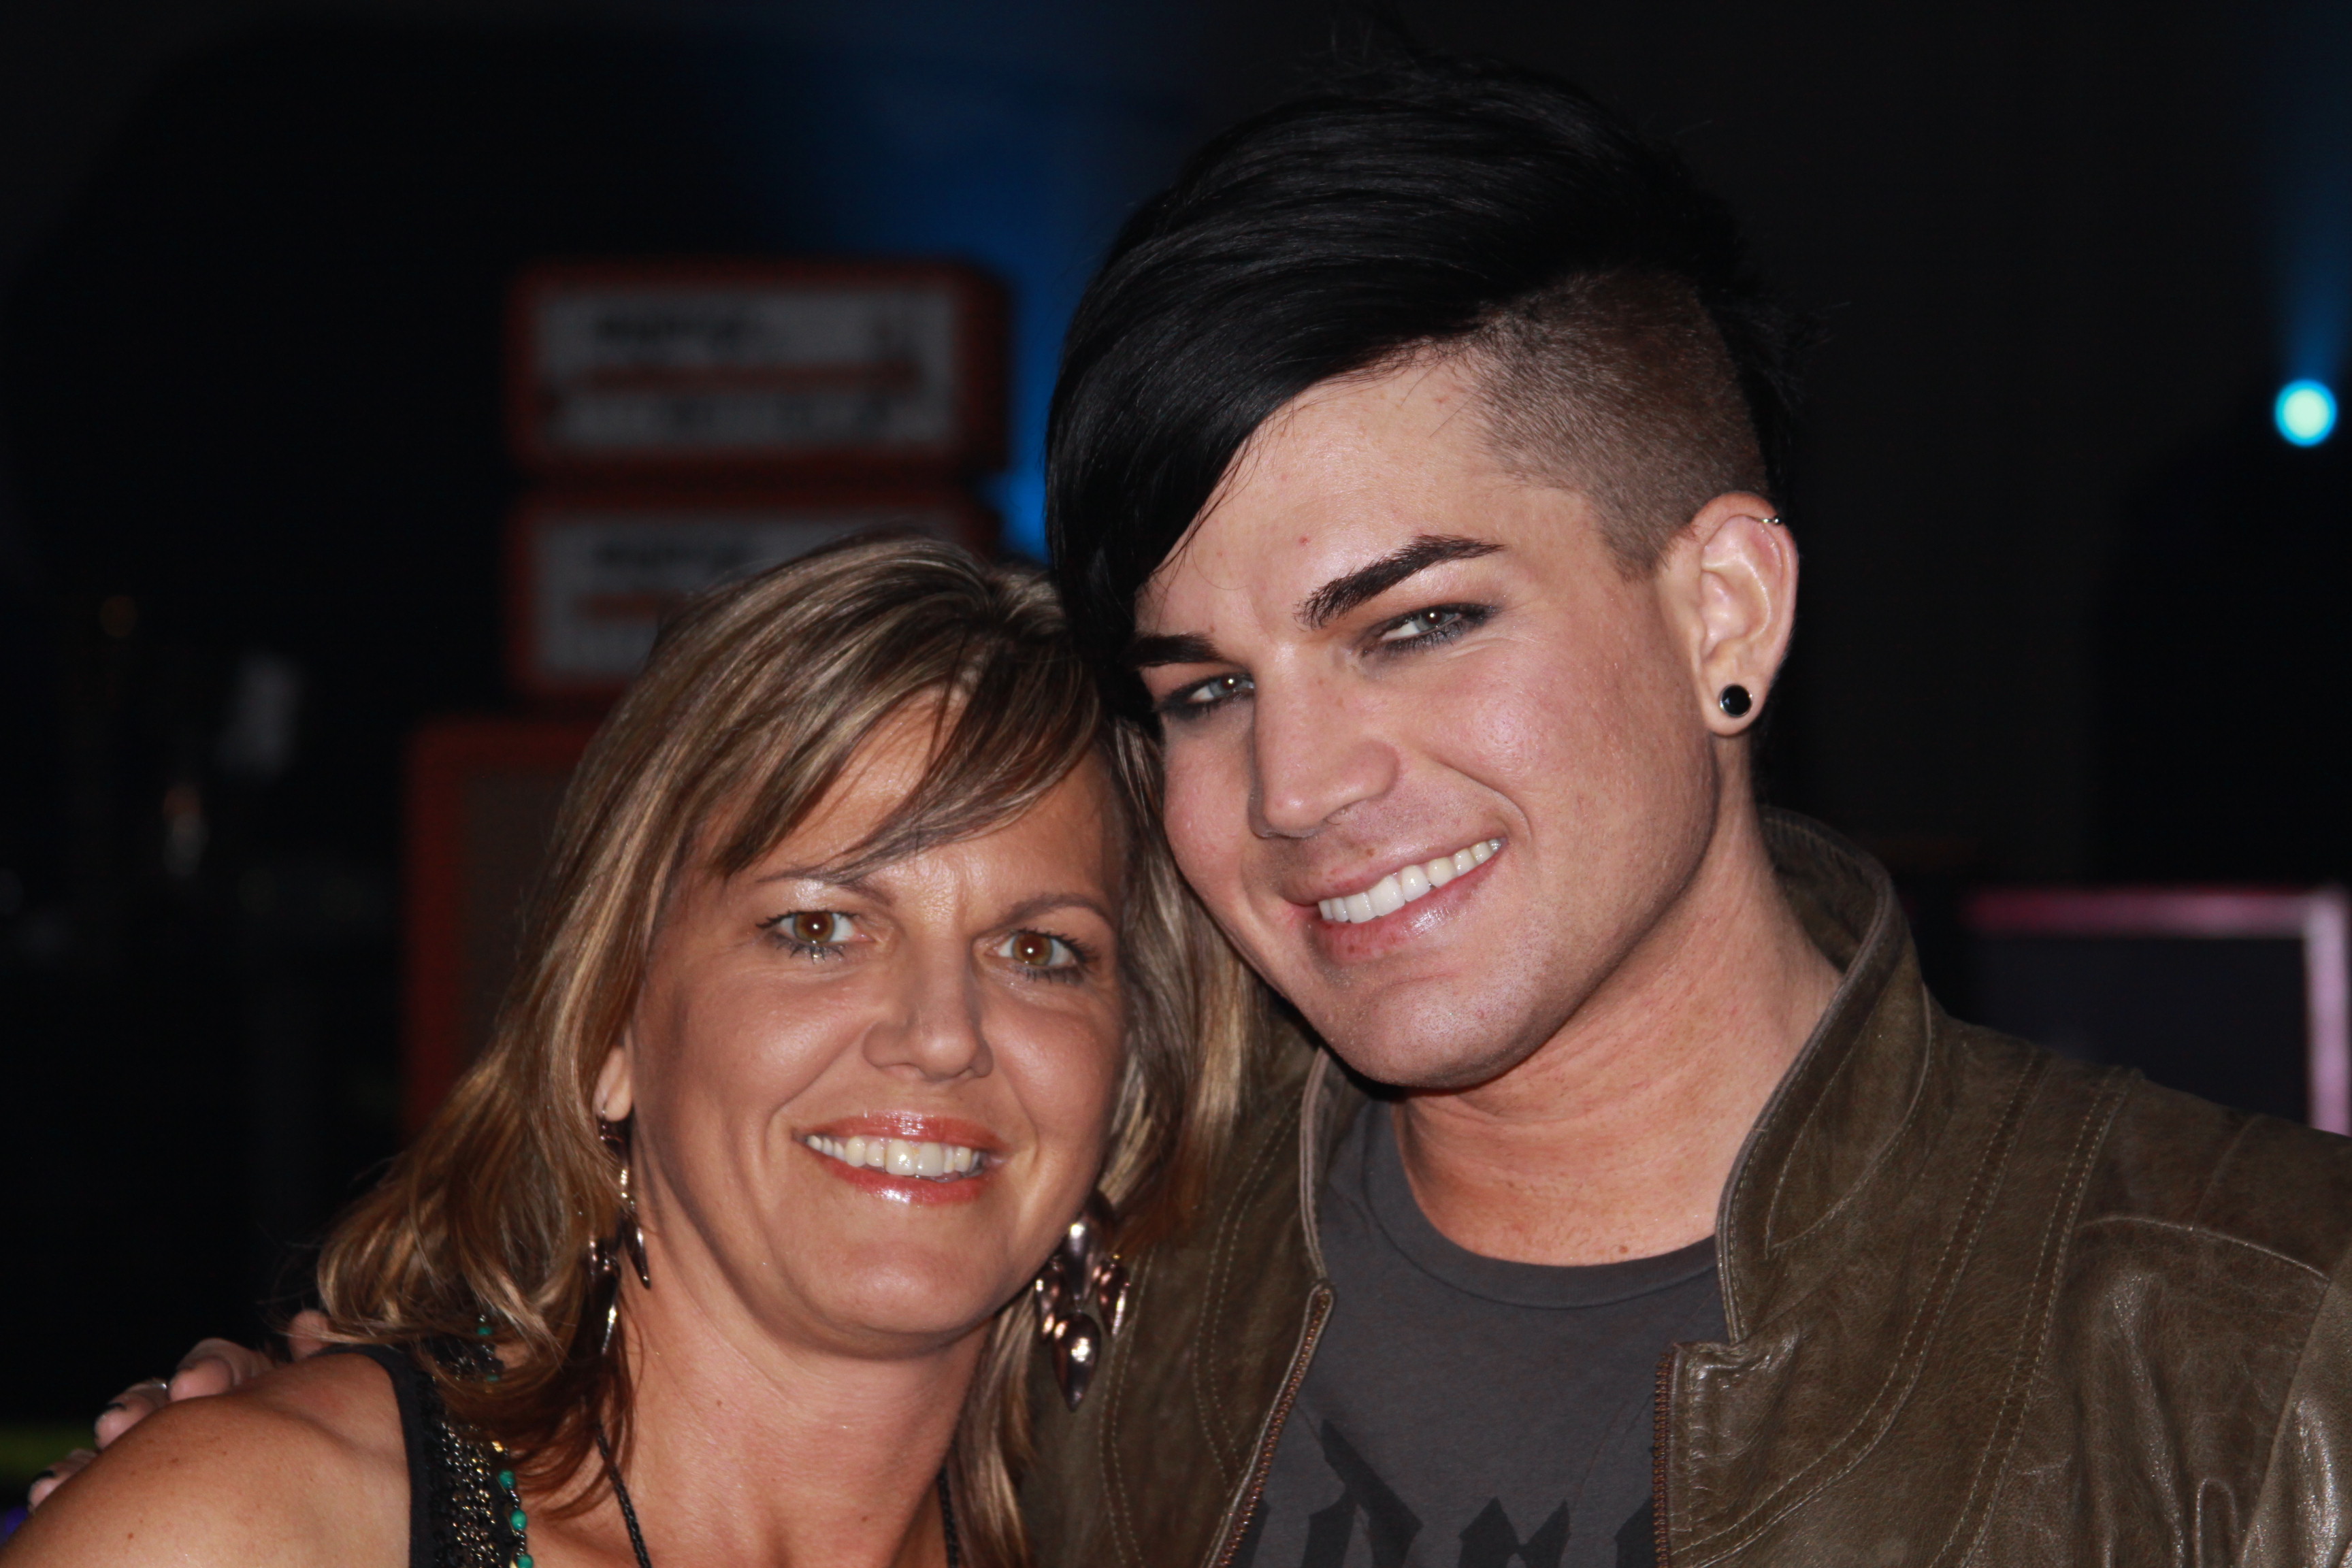 With Adam Lambert in Dallas, TX